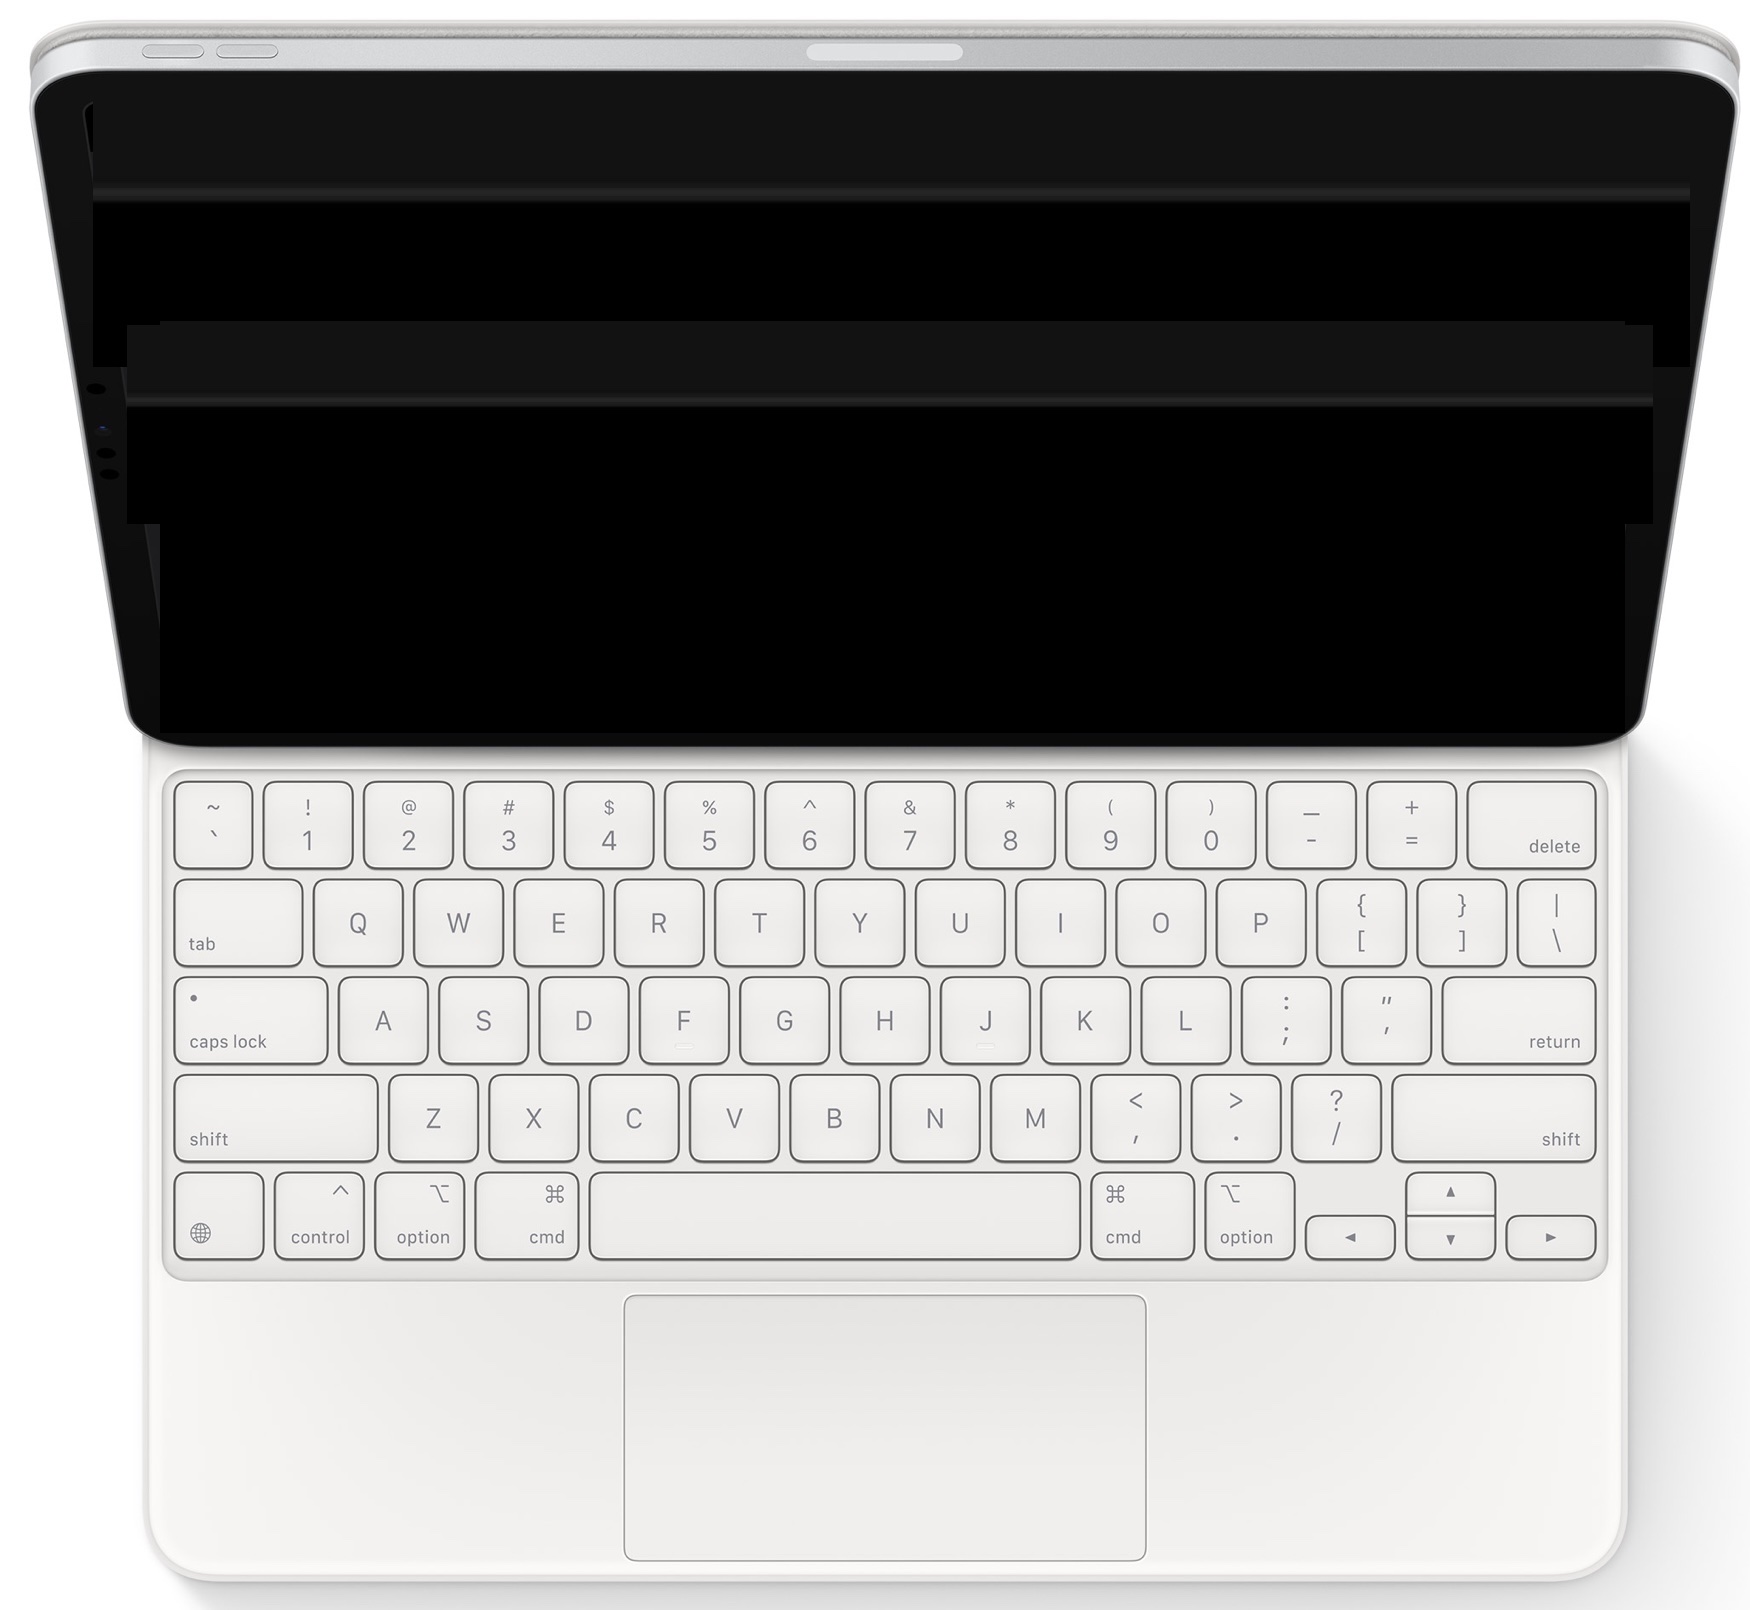 Fix Magic Keyboard Not Working on iPad Pro / Air | OSXDaily